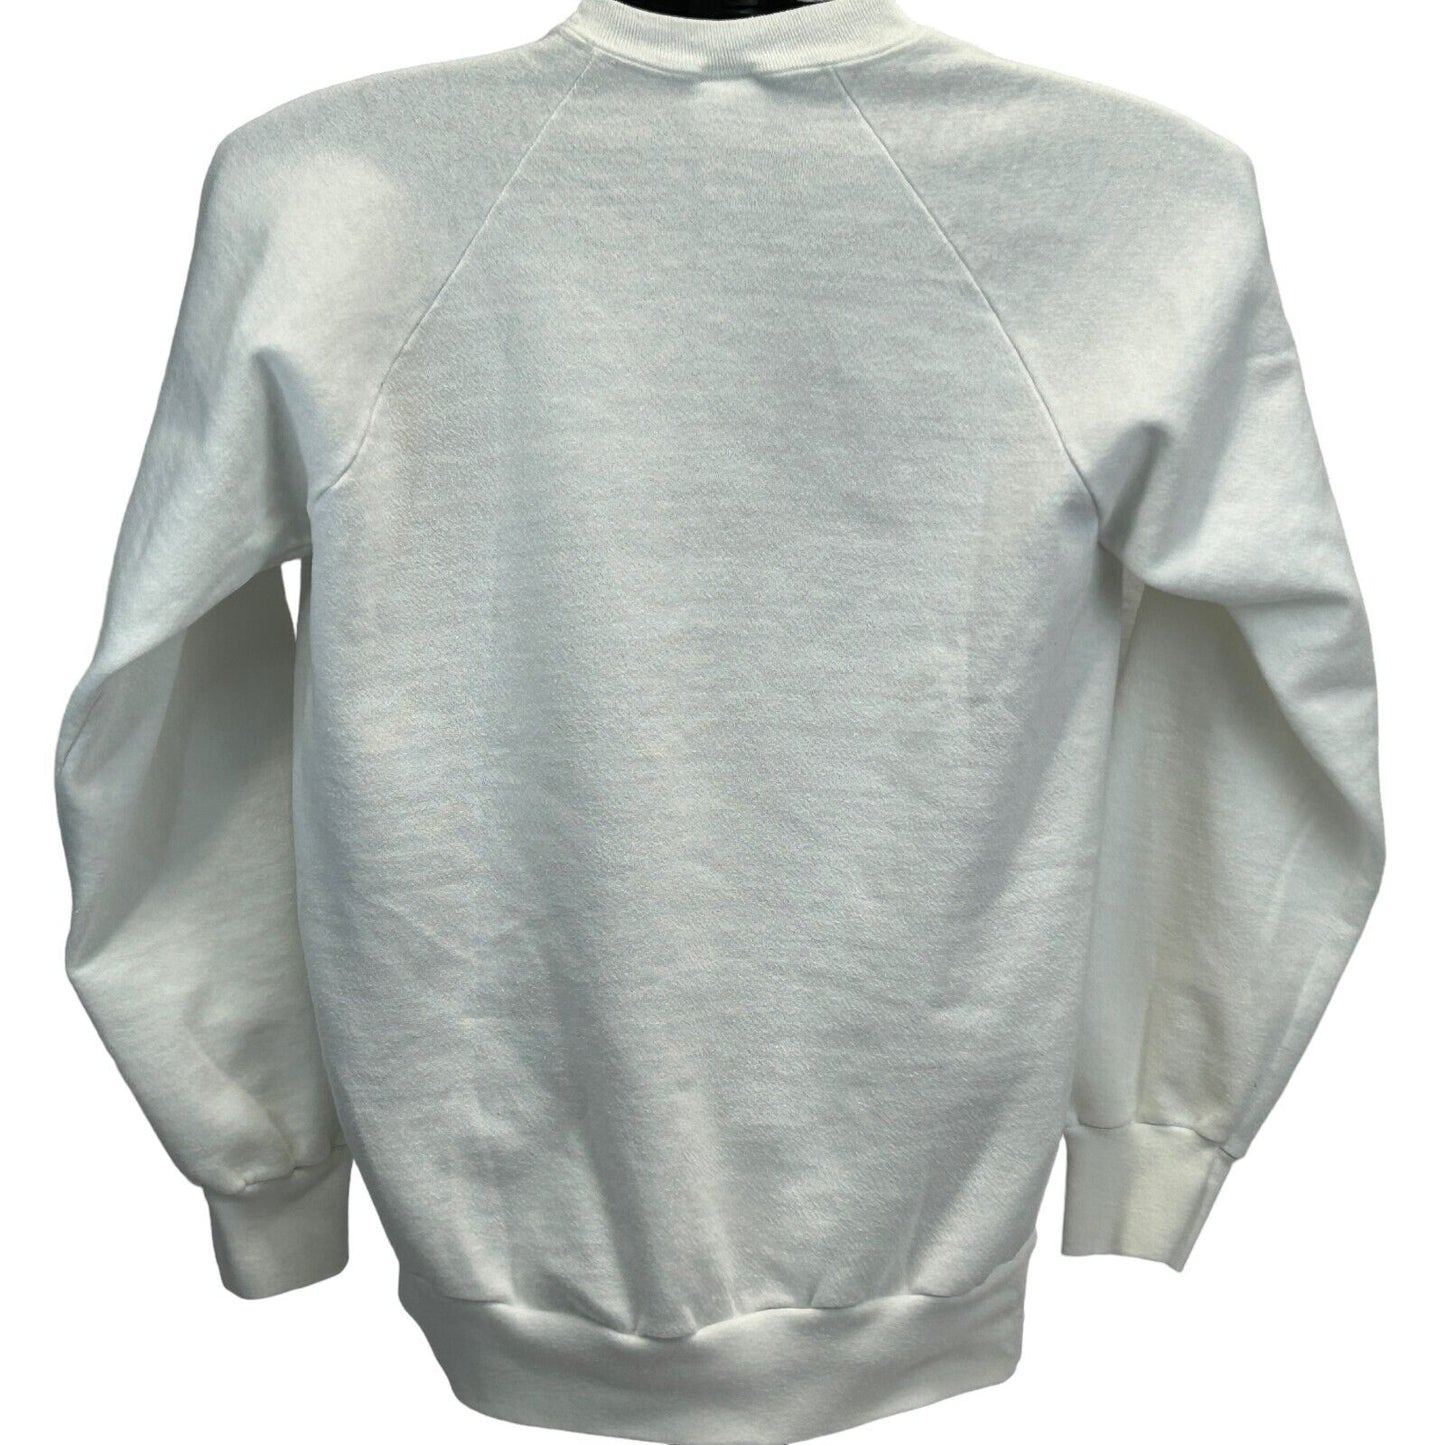 Stowe Vermont Saint St Bernard Vintage 90s Sweatshirt Small USA Made Mens White